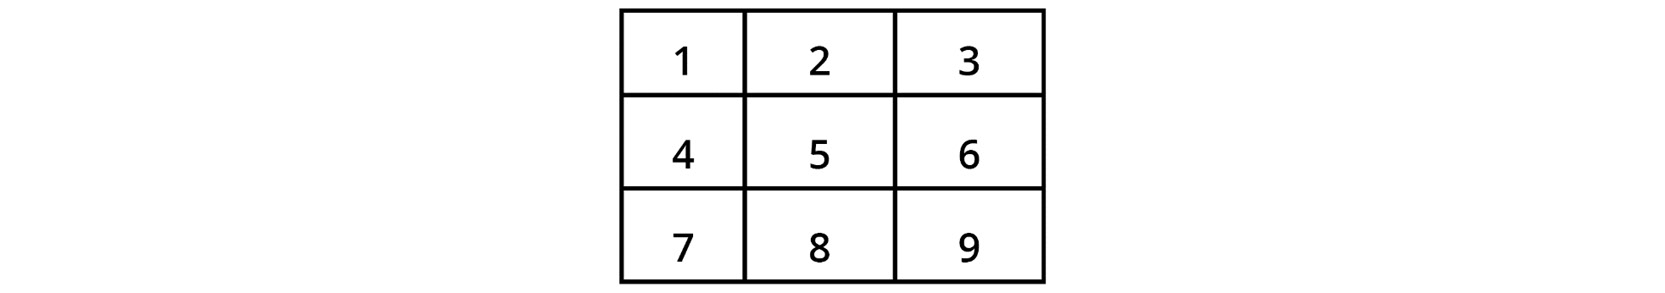 Figure 1.12: 3 x 3 matrix
